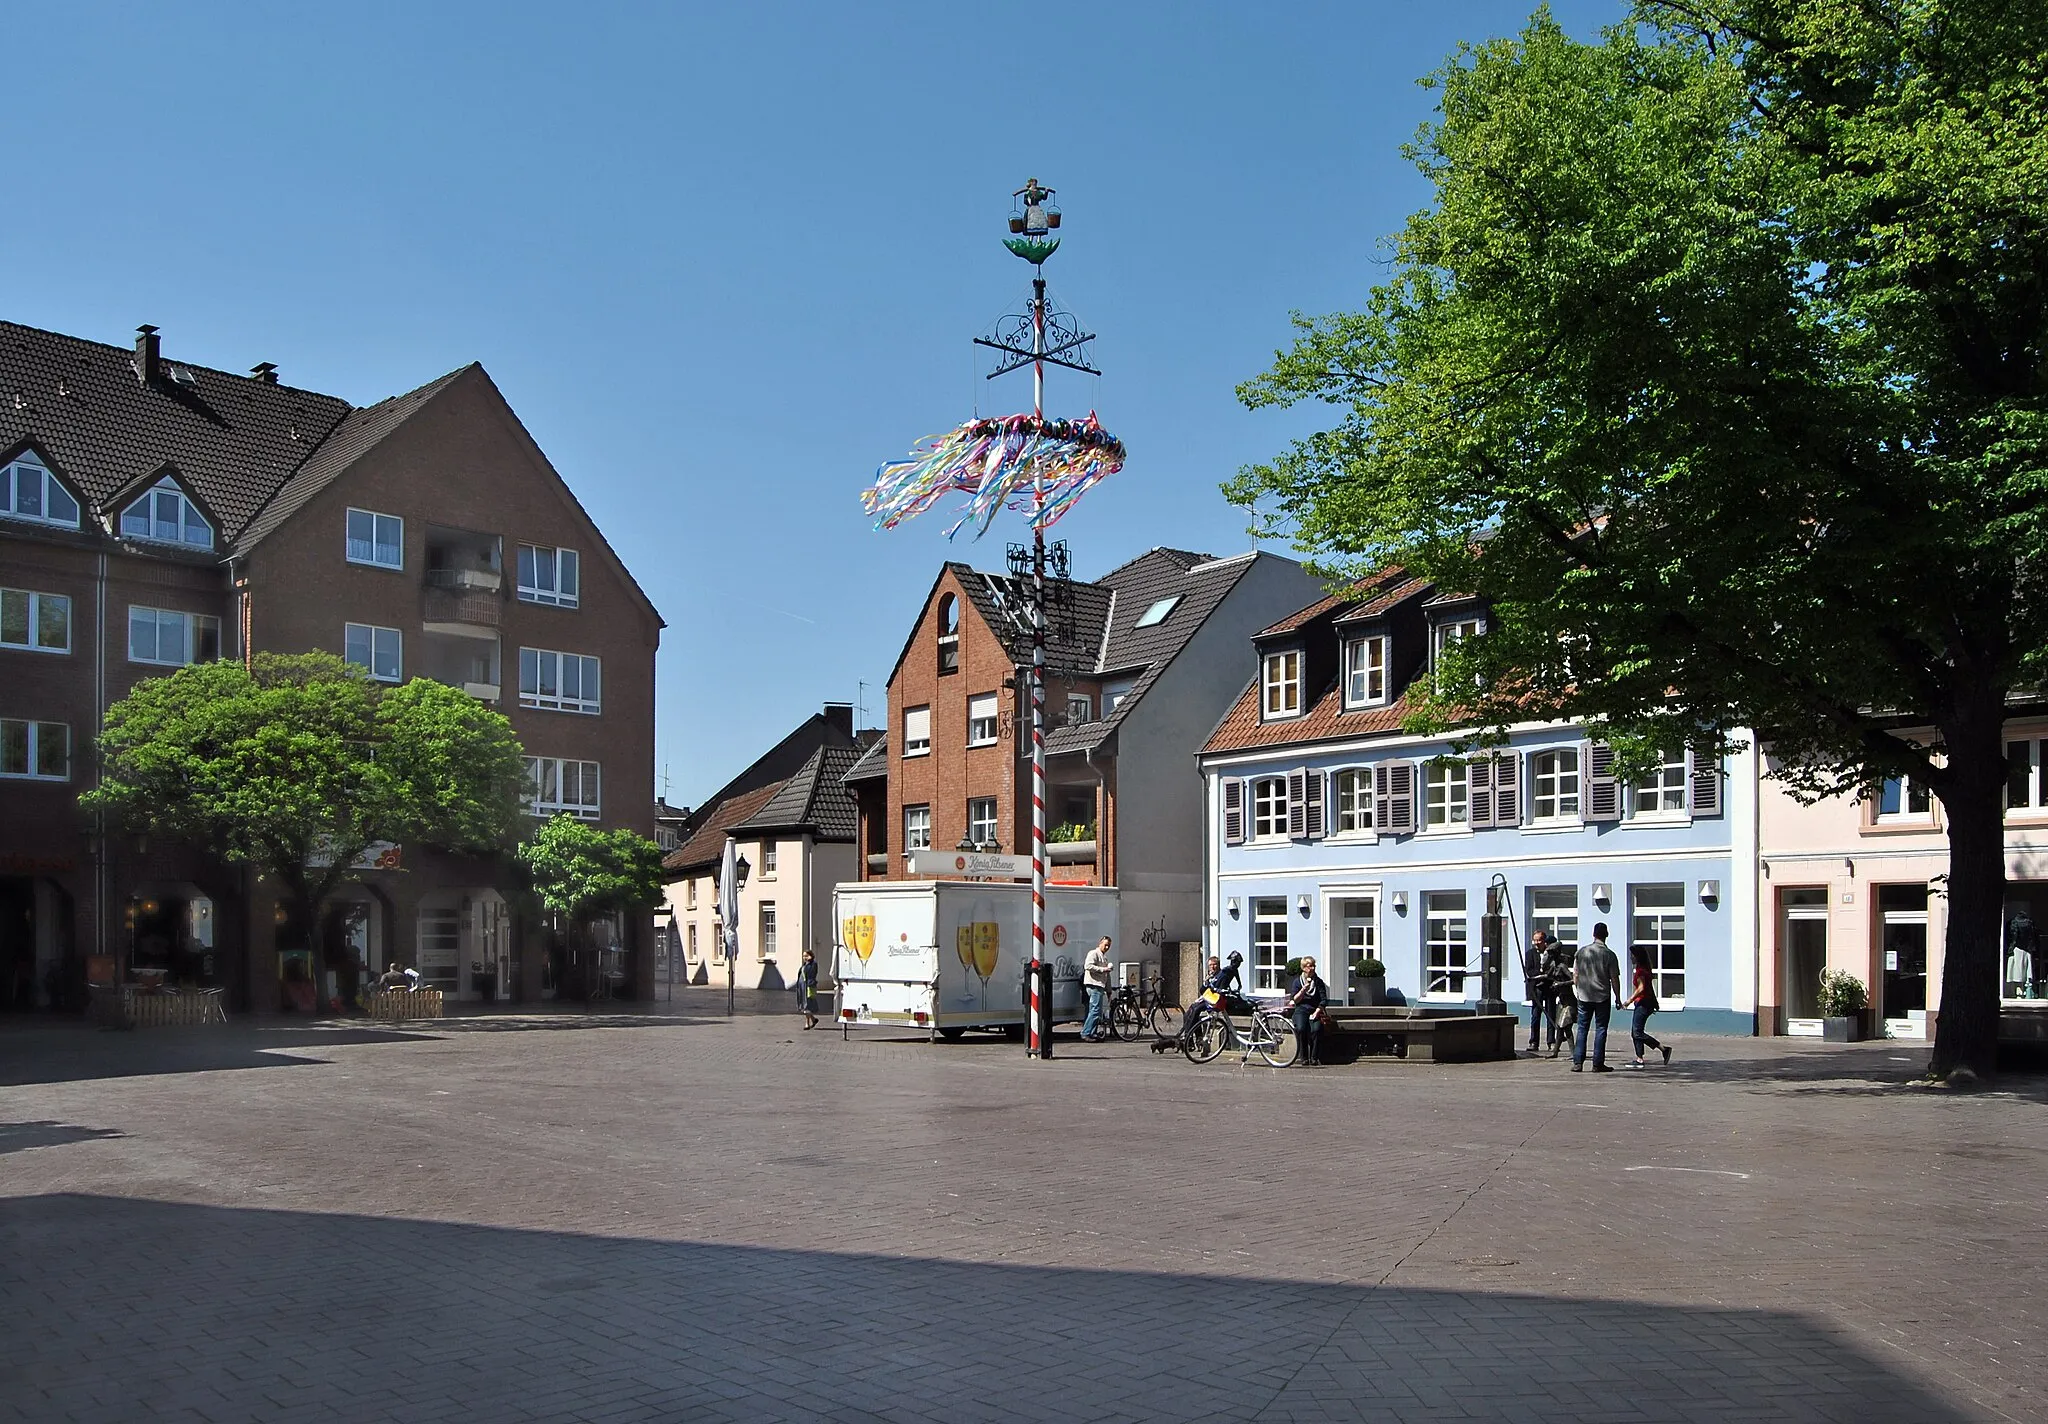 Photo showing: Old marketplace called "Altmarkt" in Dinslaken in North Rhine-Westphalia, Germany.